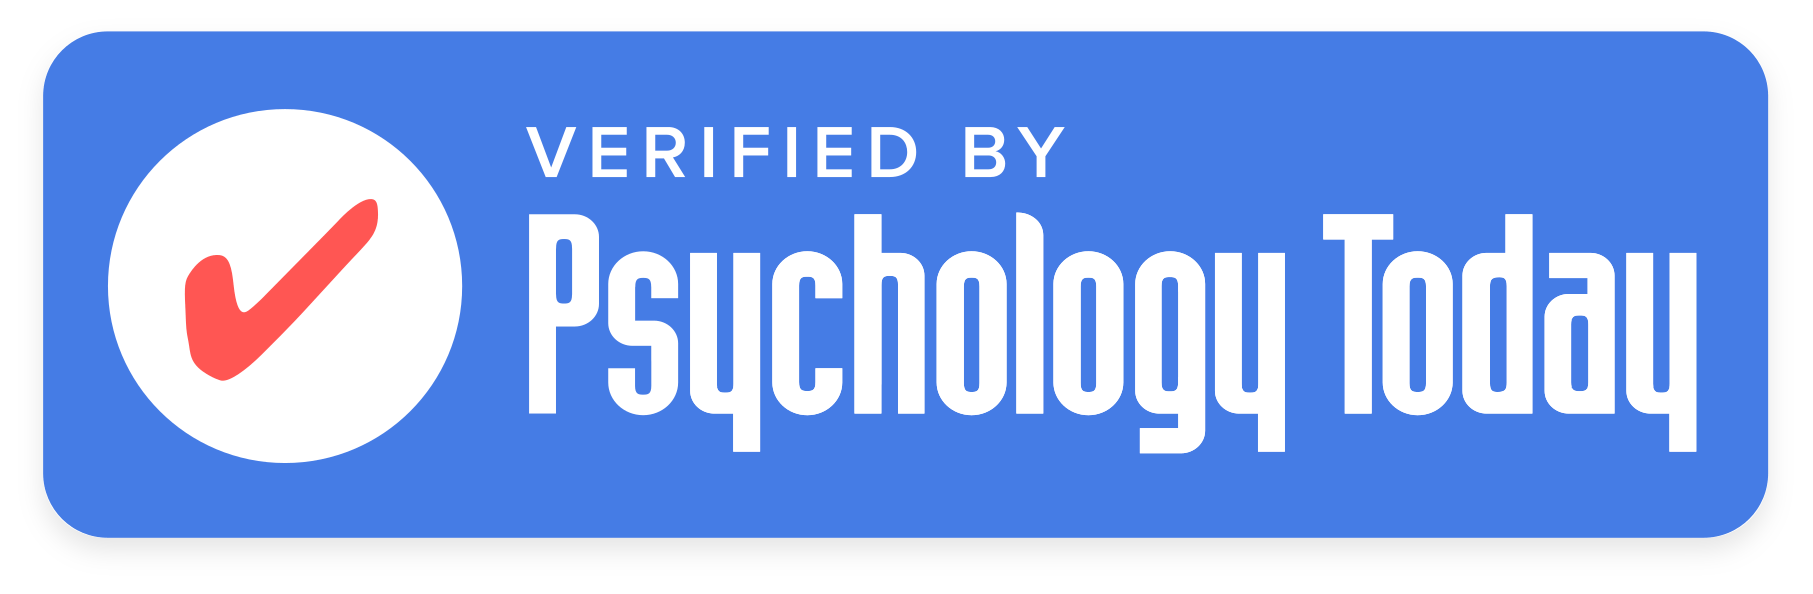 Psychology-Today-Verified.png